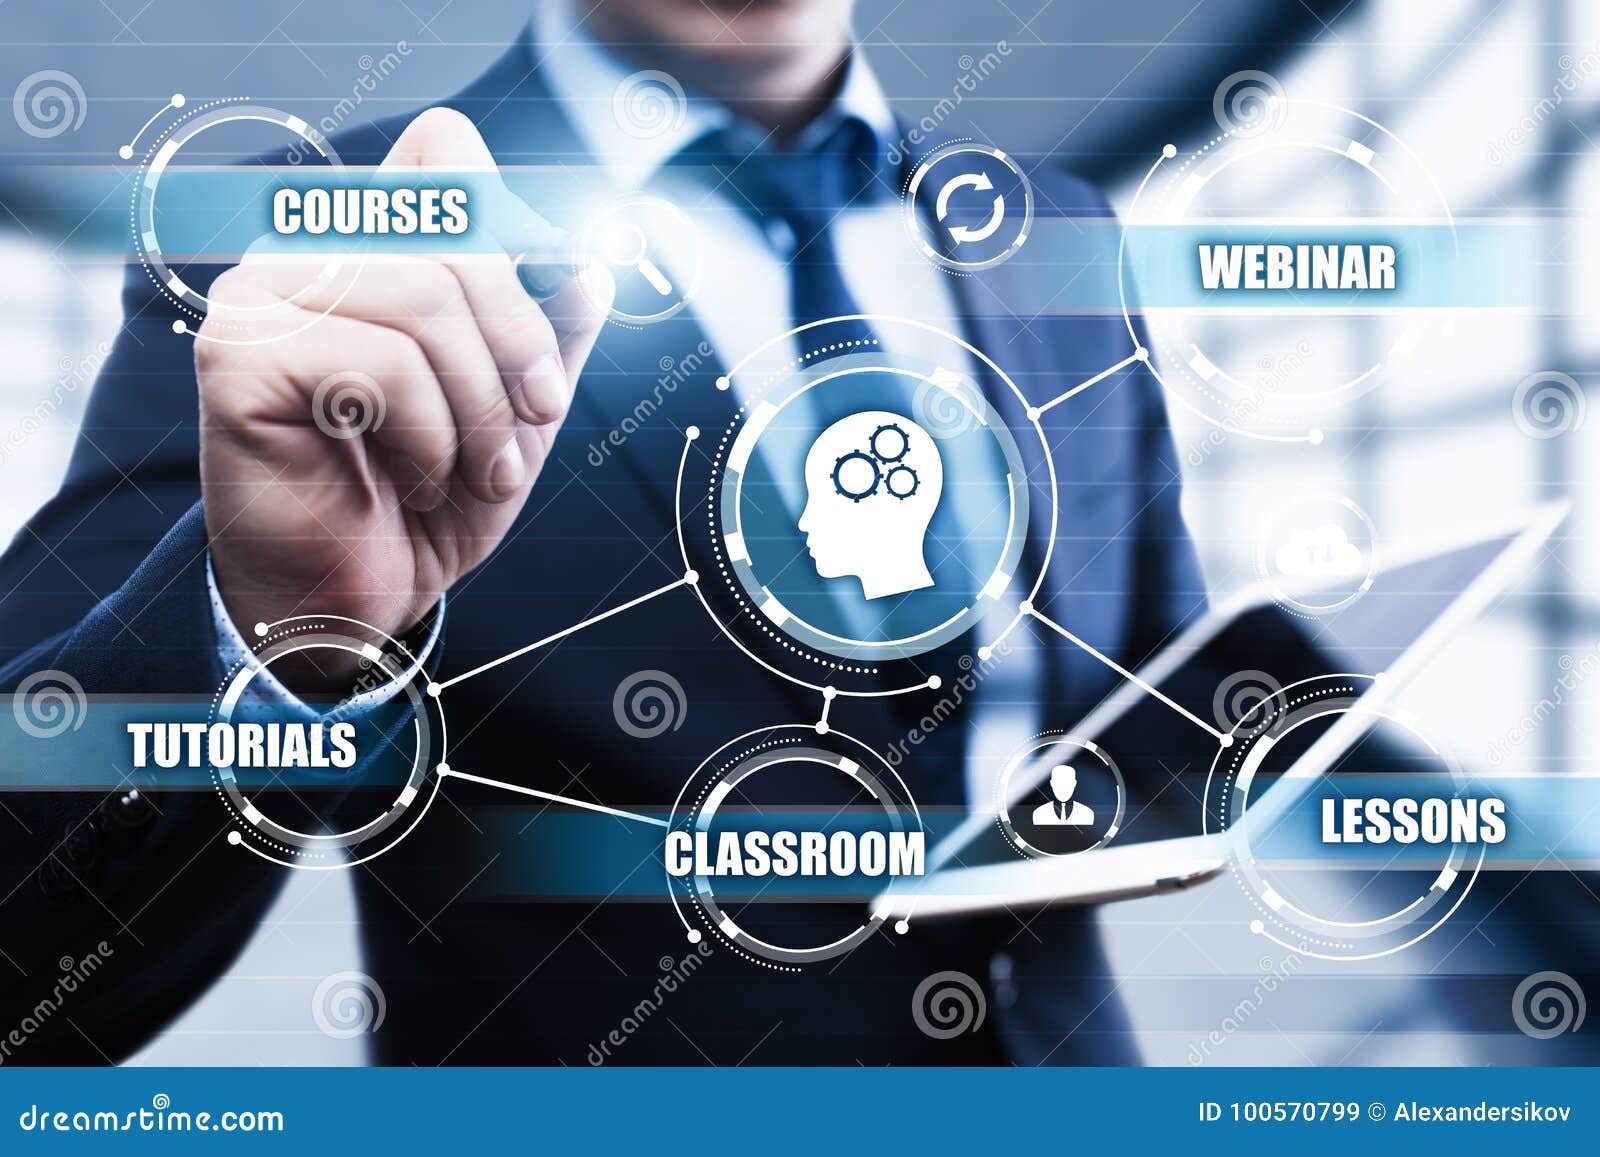 e-learning education internet technology webinar online courses concept